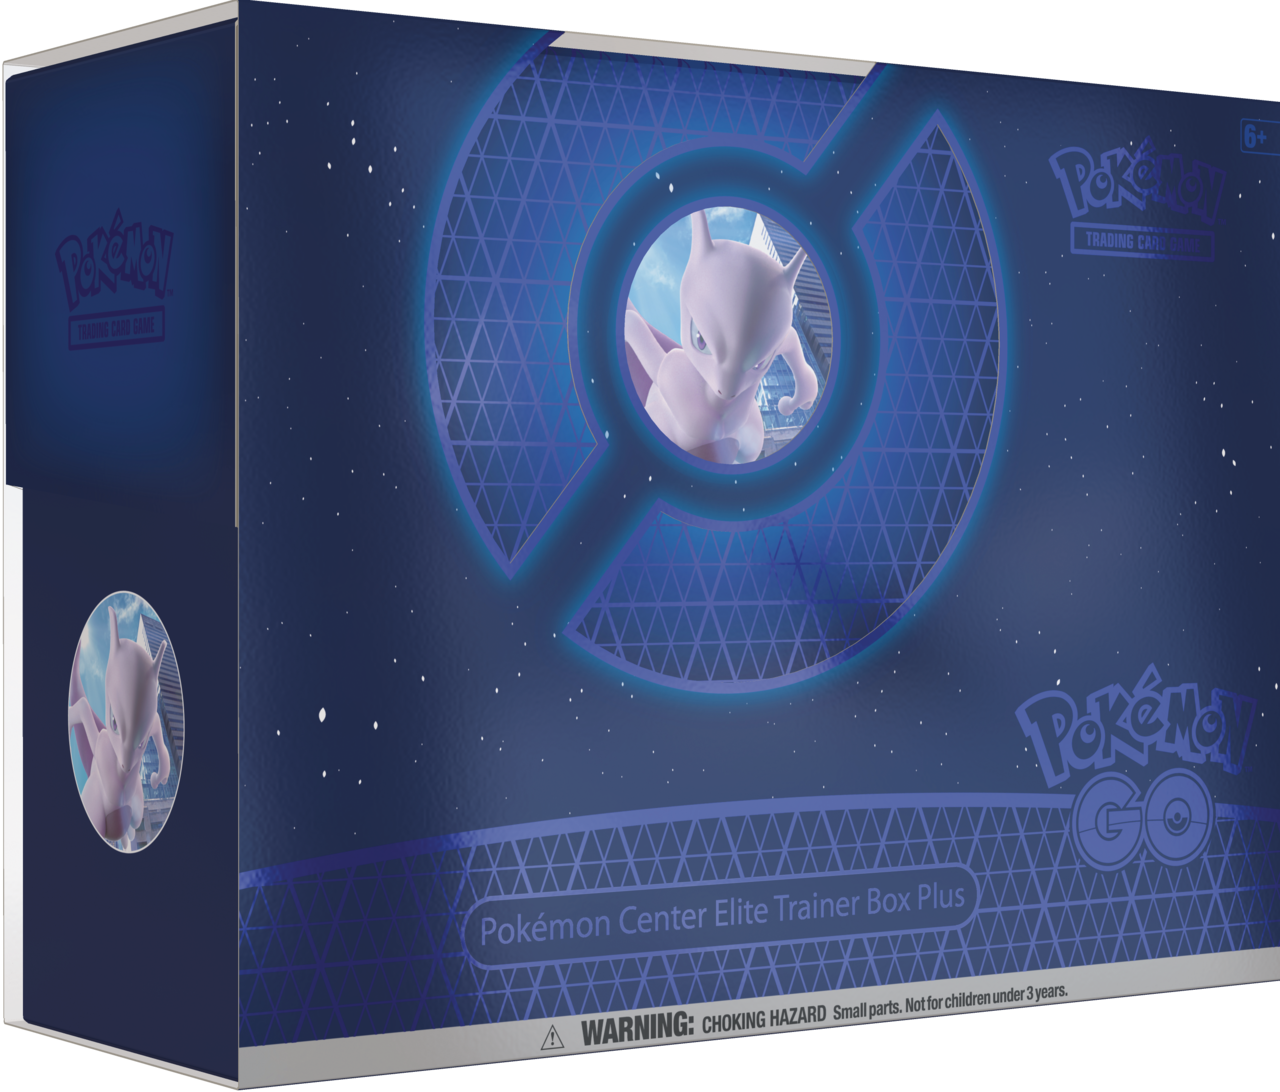 Pokémon Trading Card Game: Go Wave 1 Radiant Eevee Premium Collection 